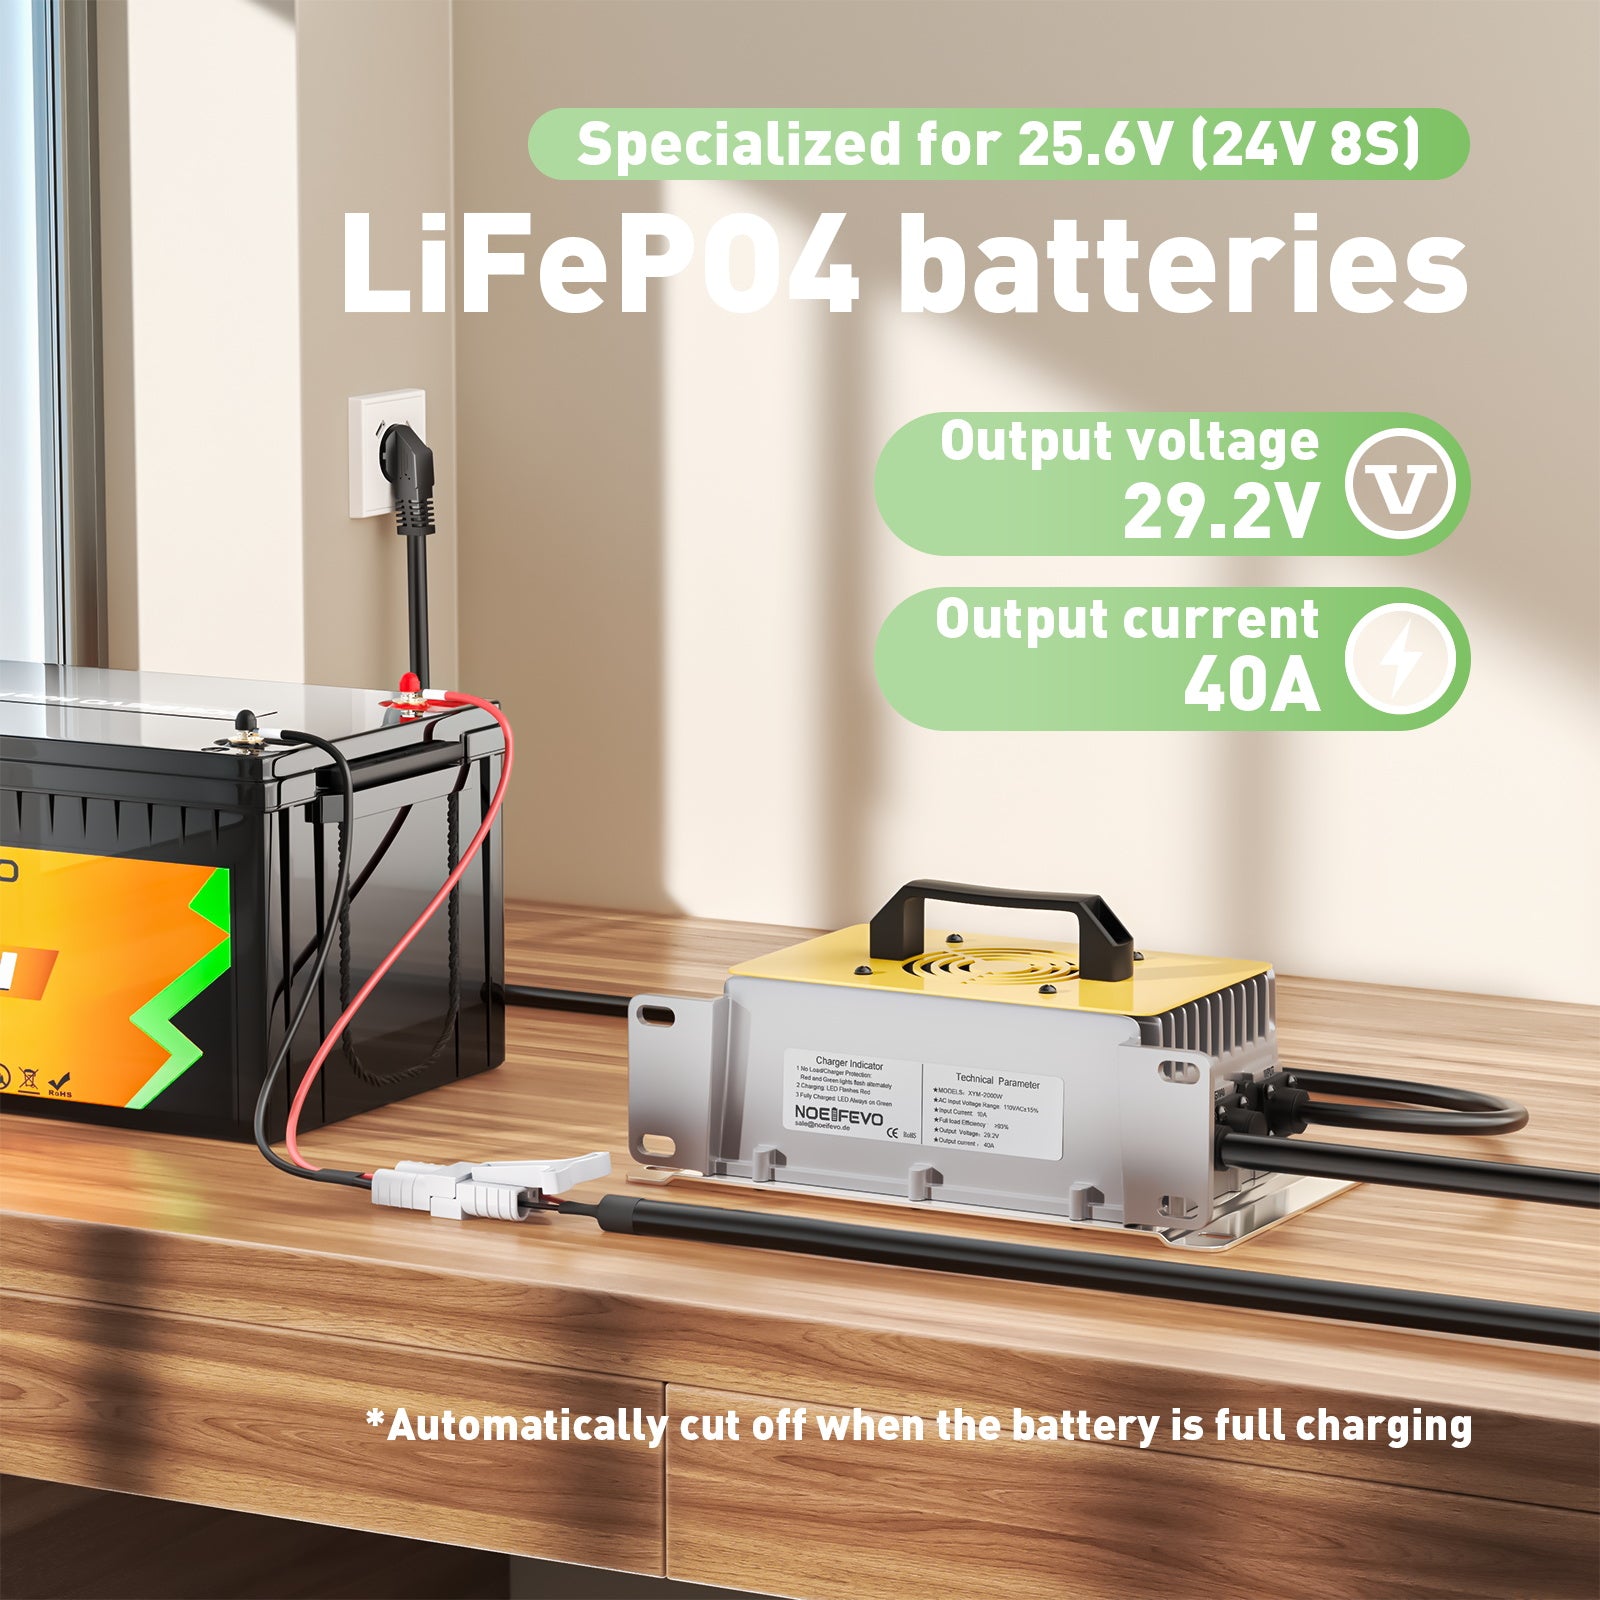 NOEIFEVO 29.2V 40A Waterproof charger for 24V 25.6V Lithium iron phosphate battery,0V Activation function